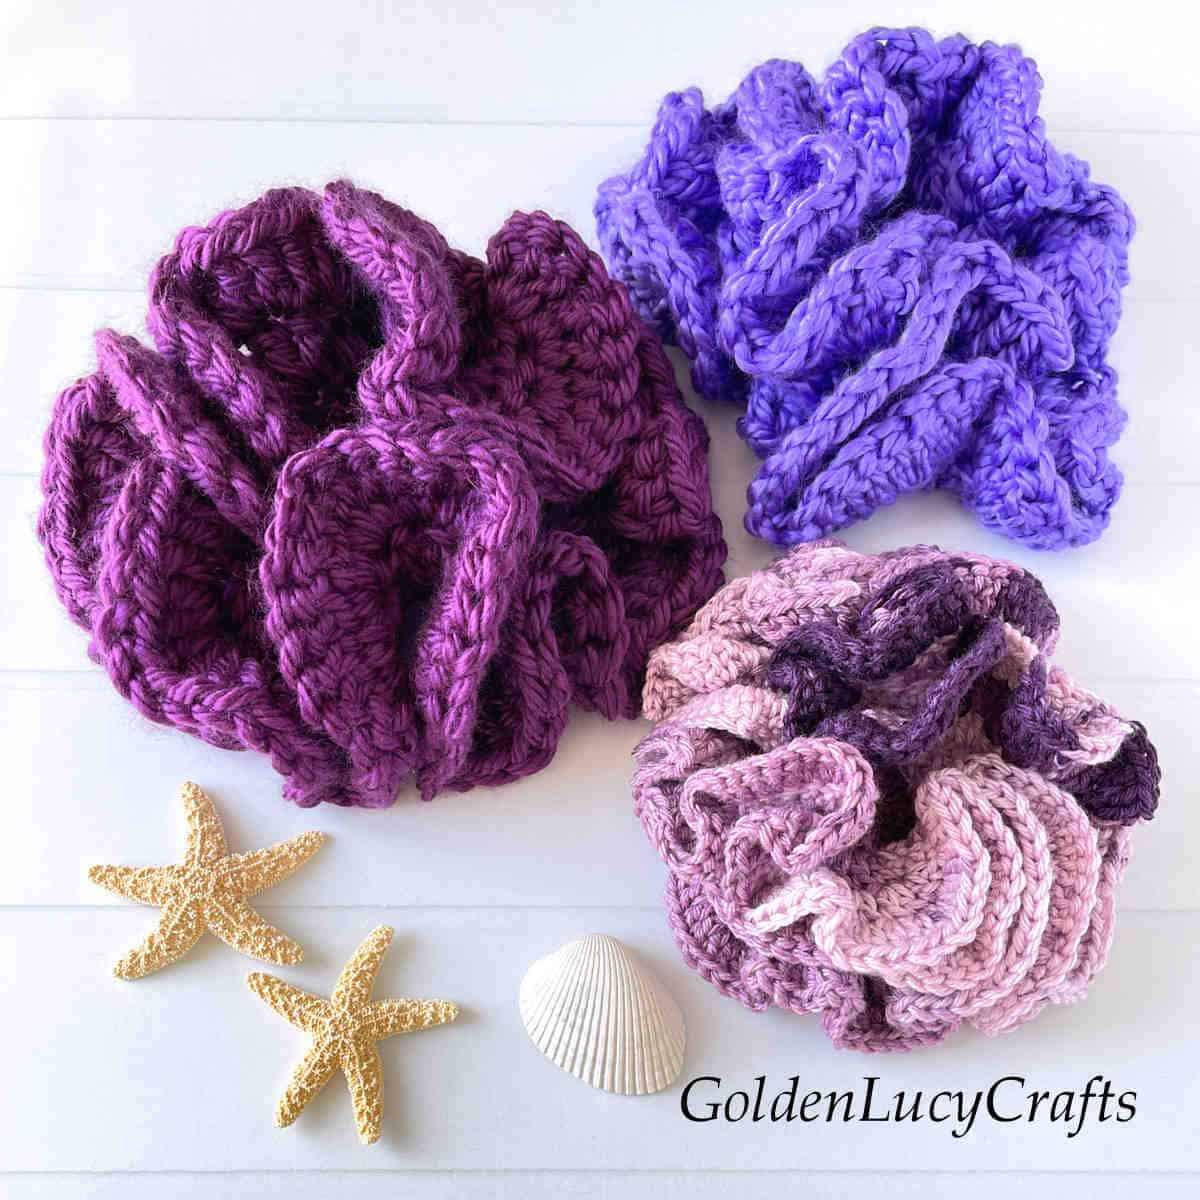 Three crocheted hyperbolic corals.